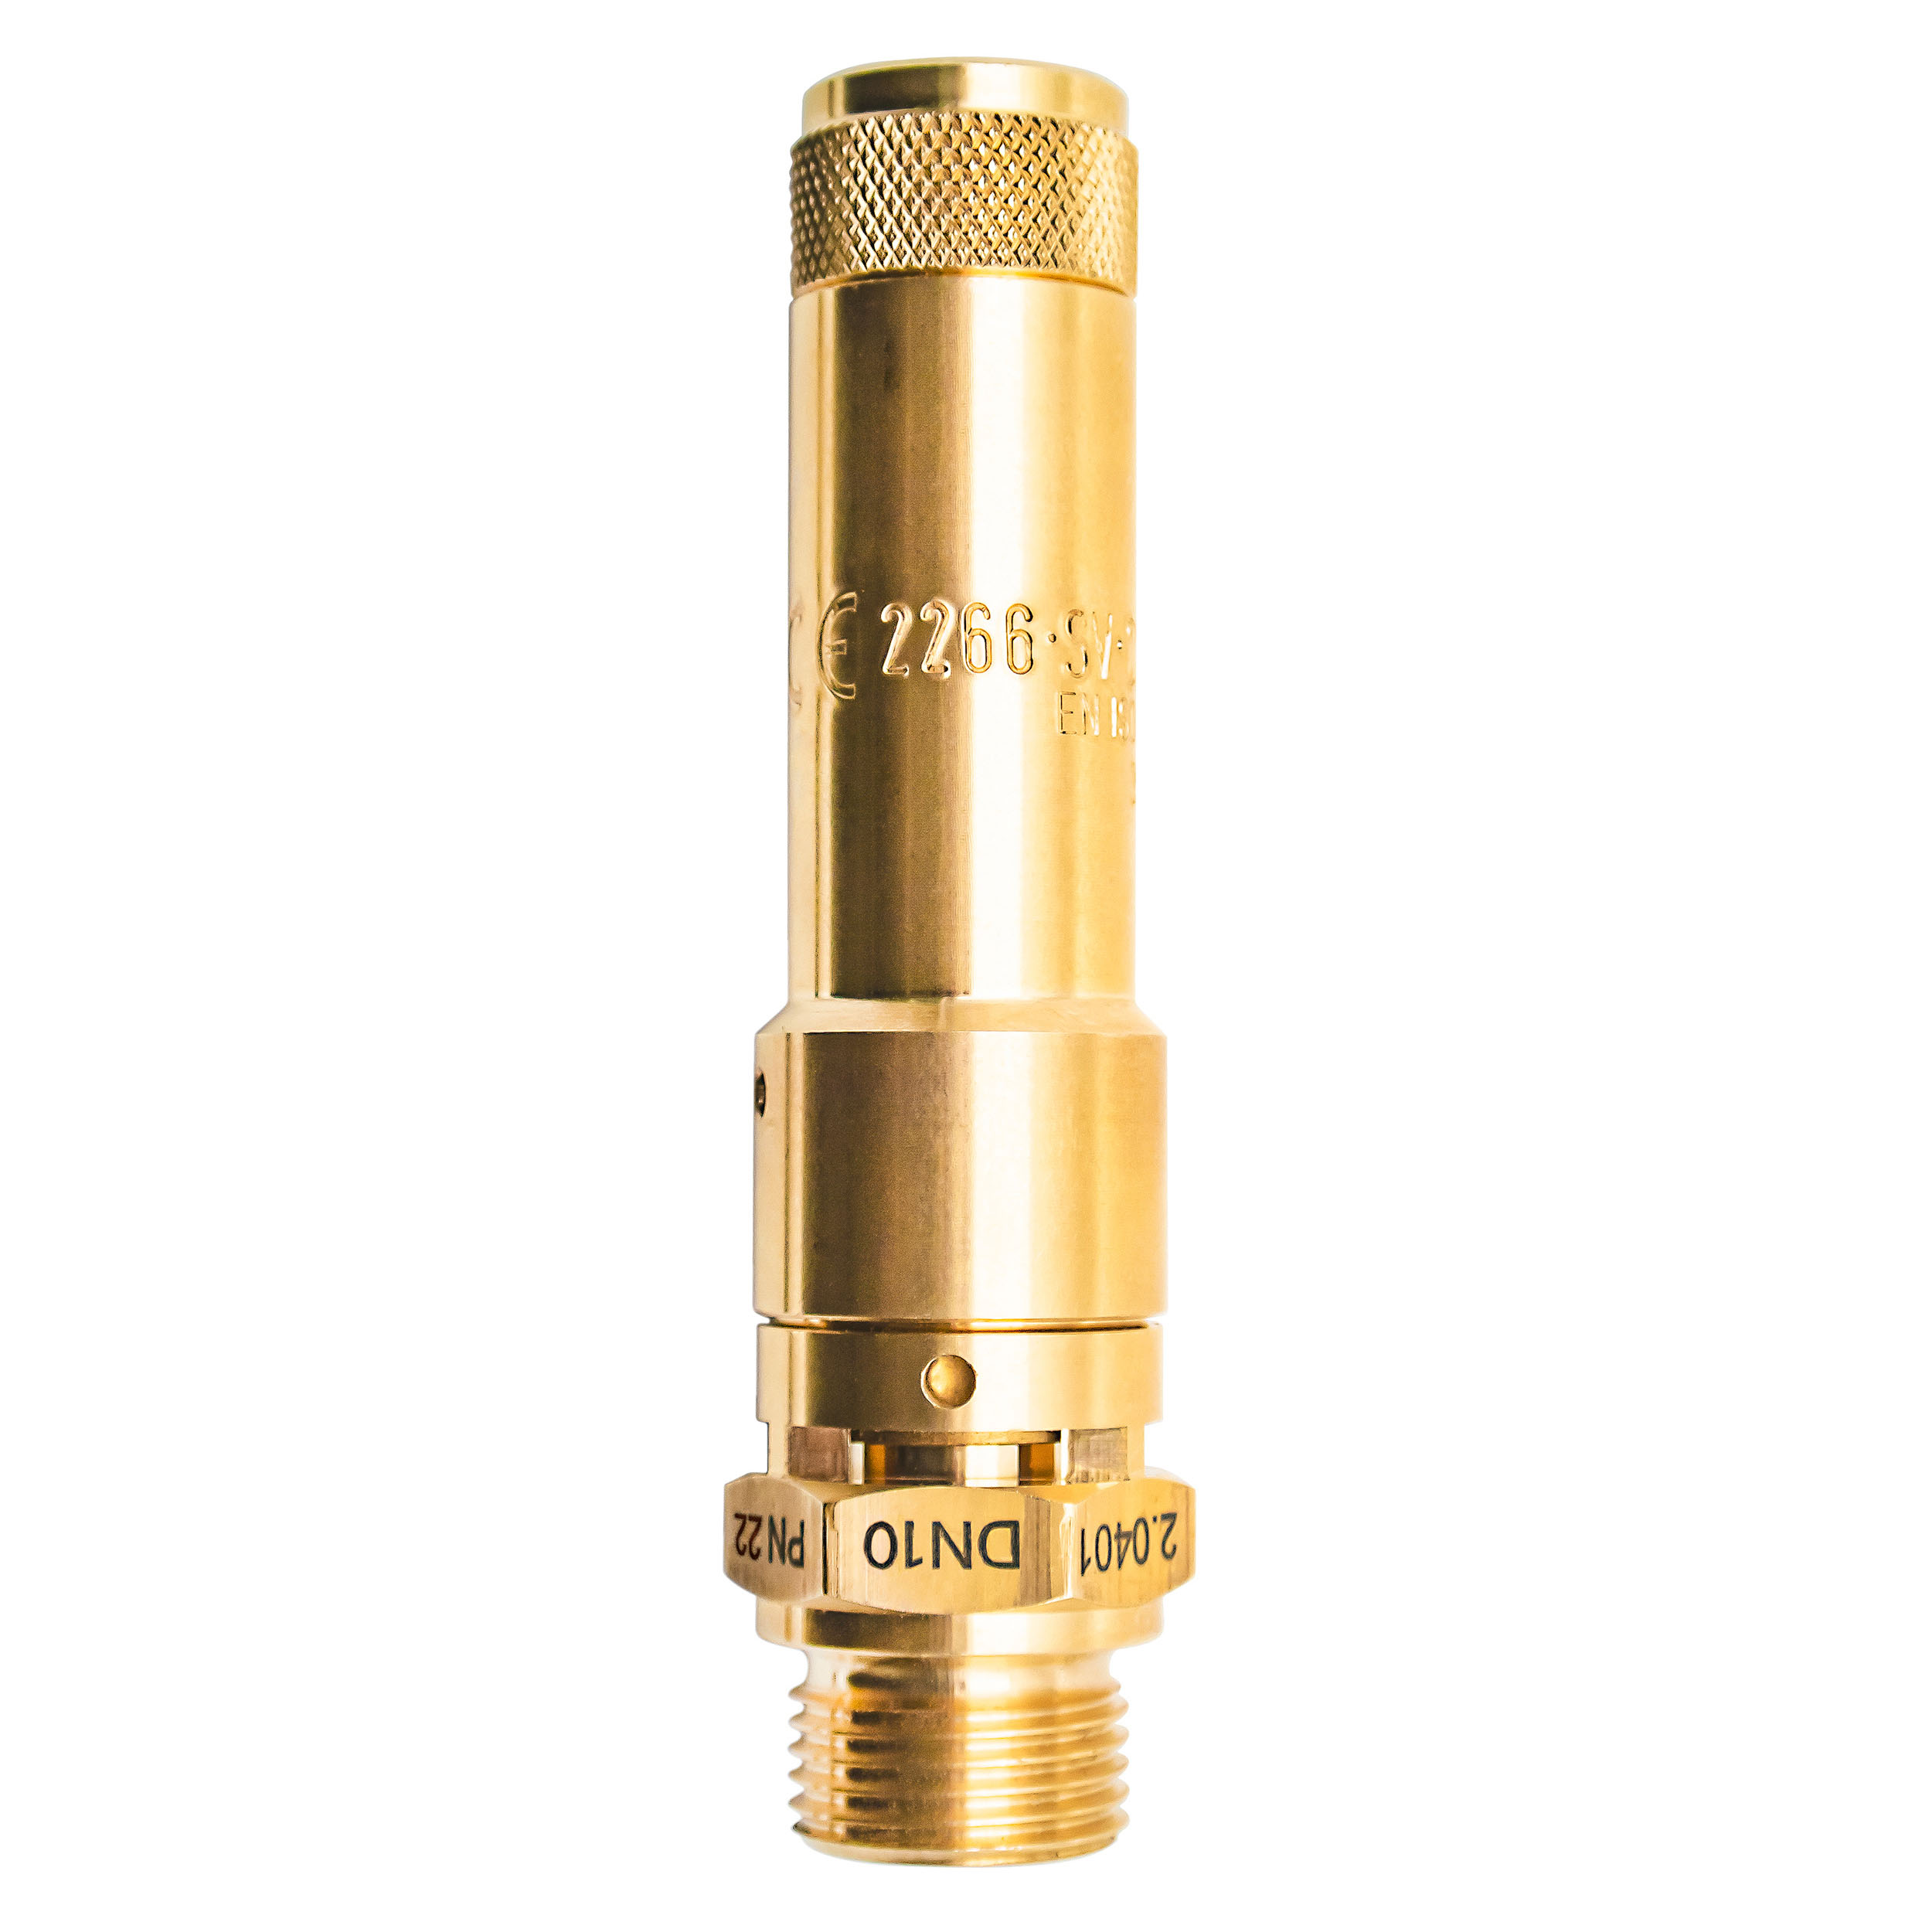 Savety valve component tested DN 10, G¾, set pressure: 15.6 bar (226,2 psi)